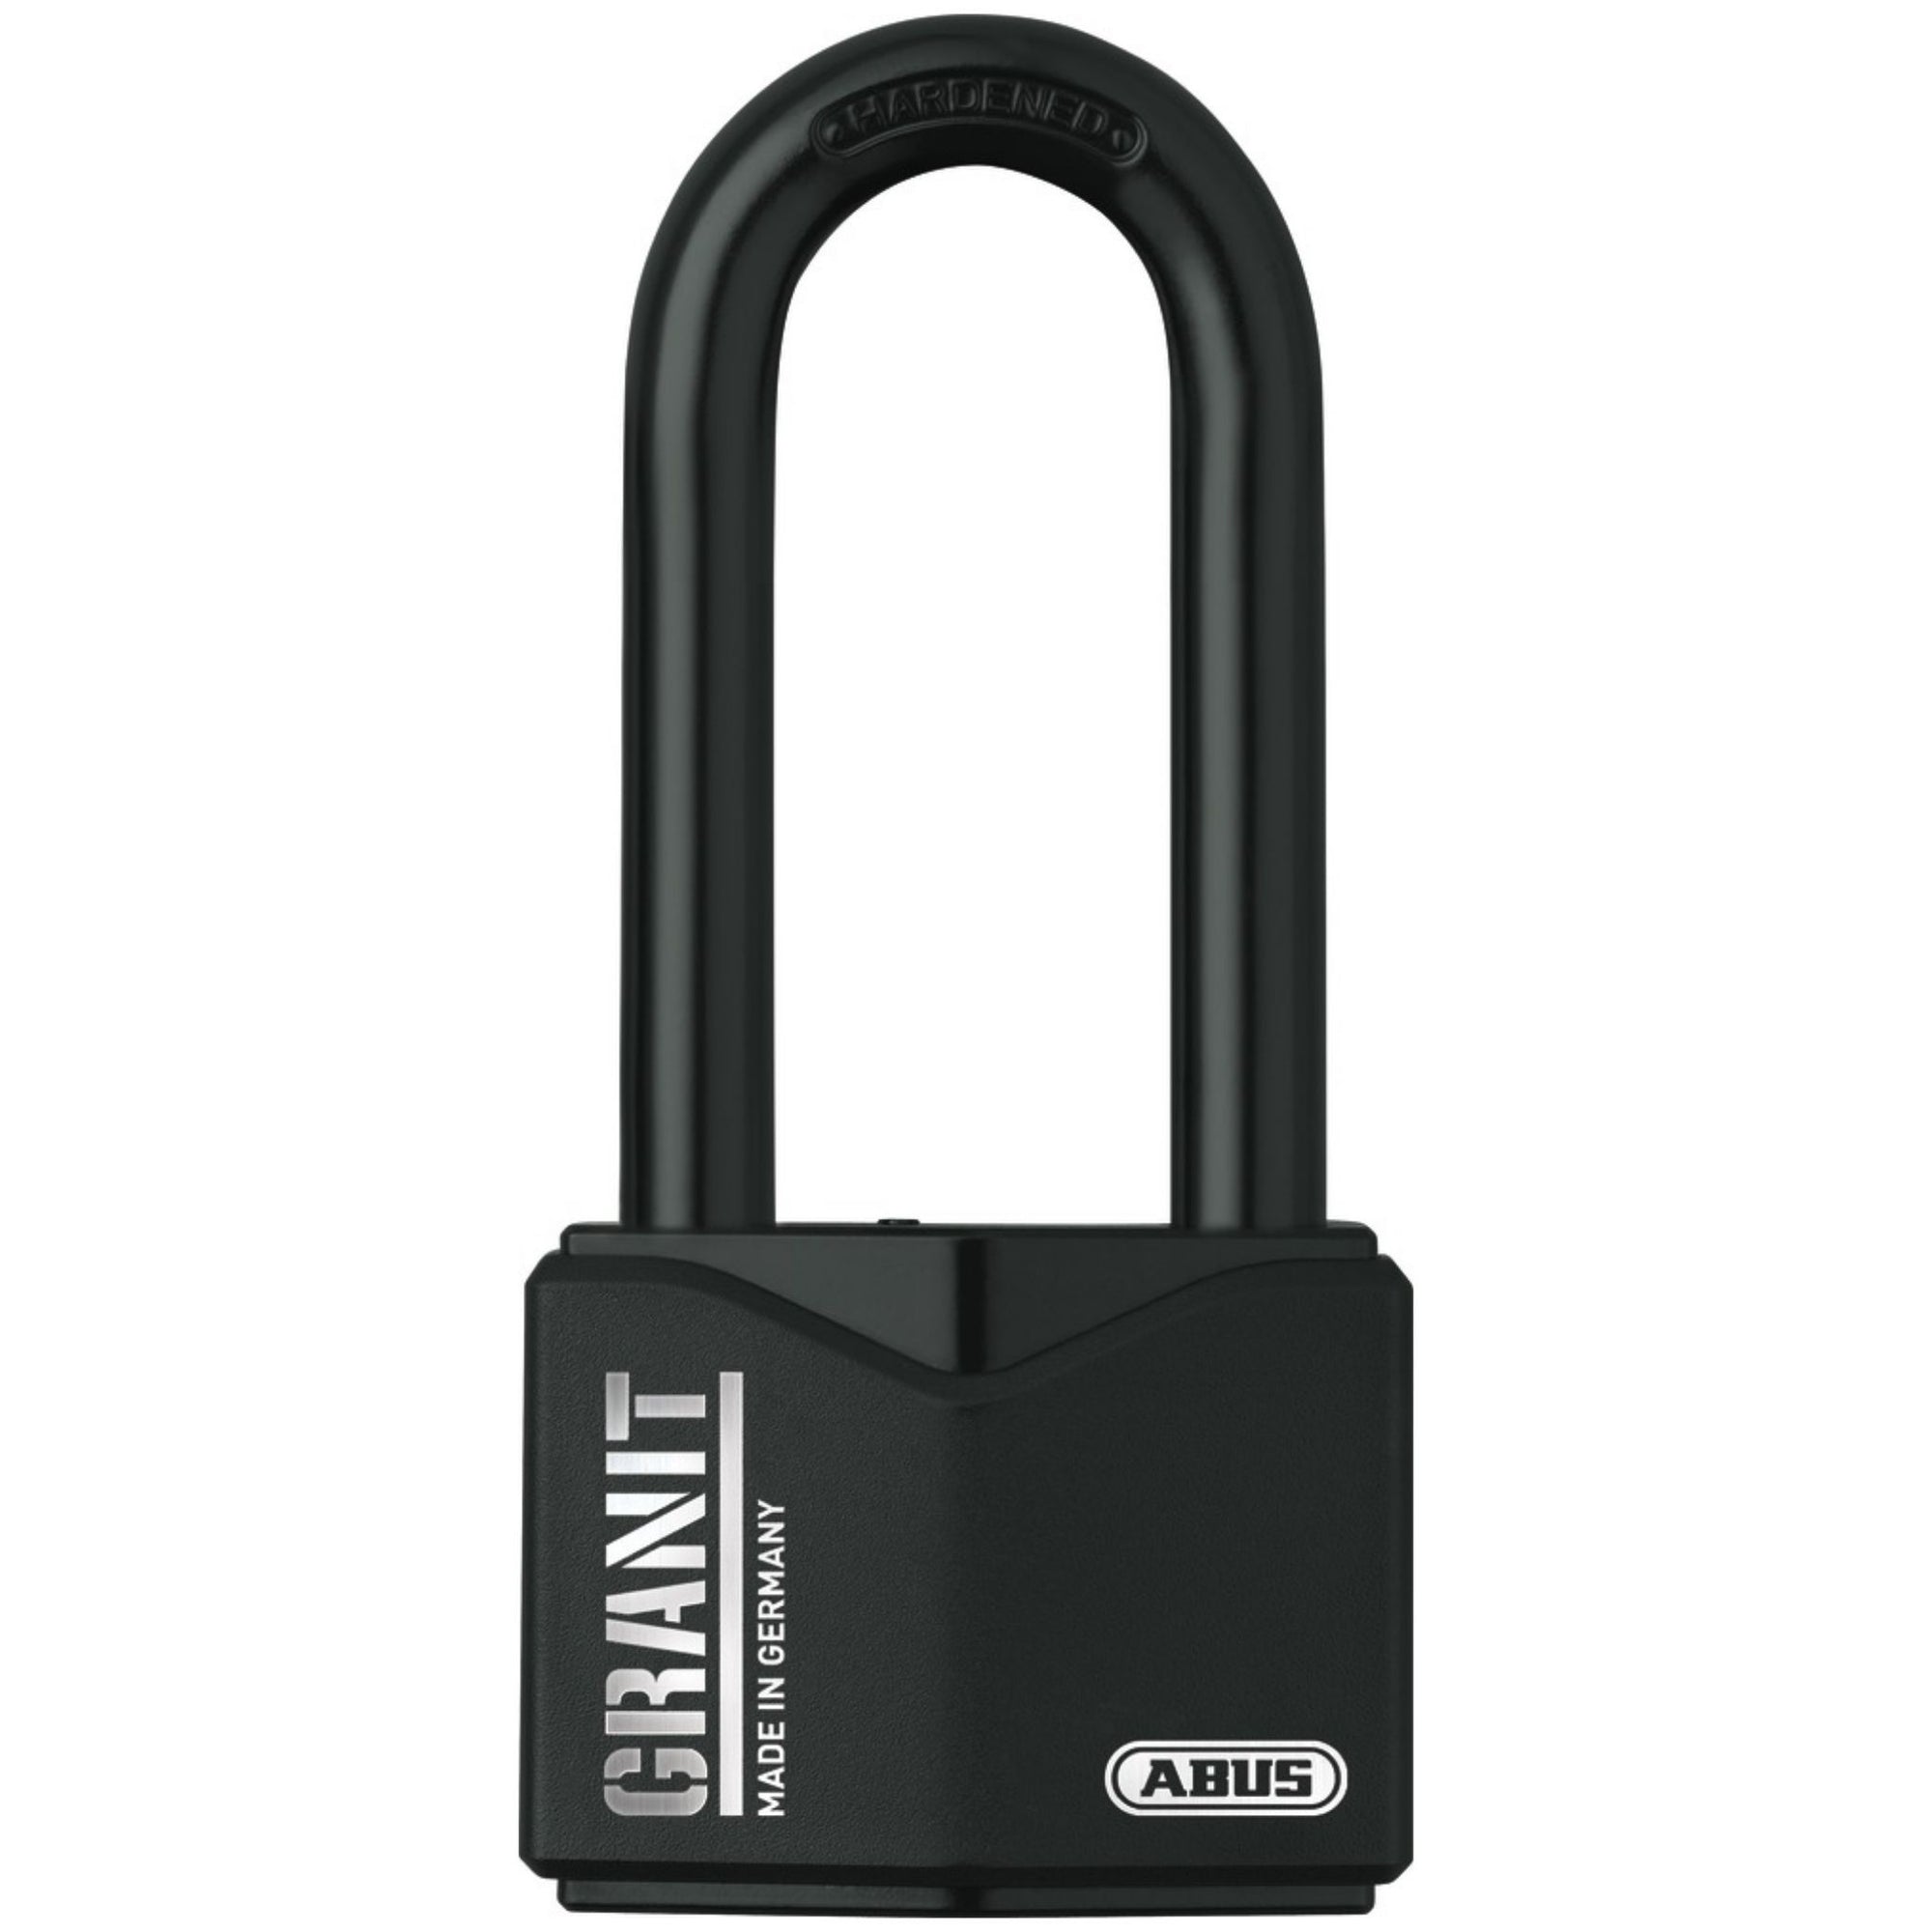 Abus 37RK/55hb75 KA 4346523 Granit Padlock Keyed Alike Locks with 3" Shackle Match to Existing Key# KA4346523 - The Lock Source